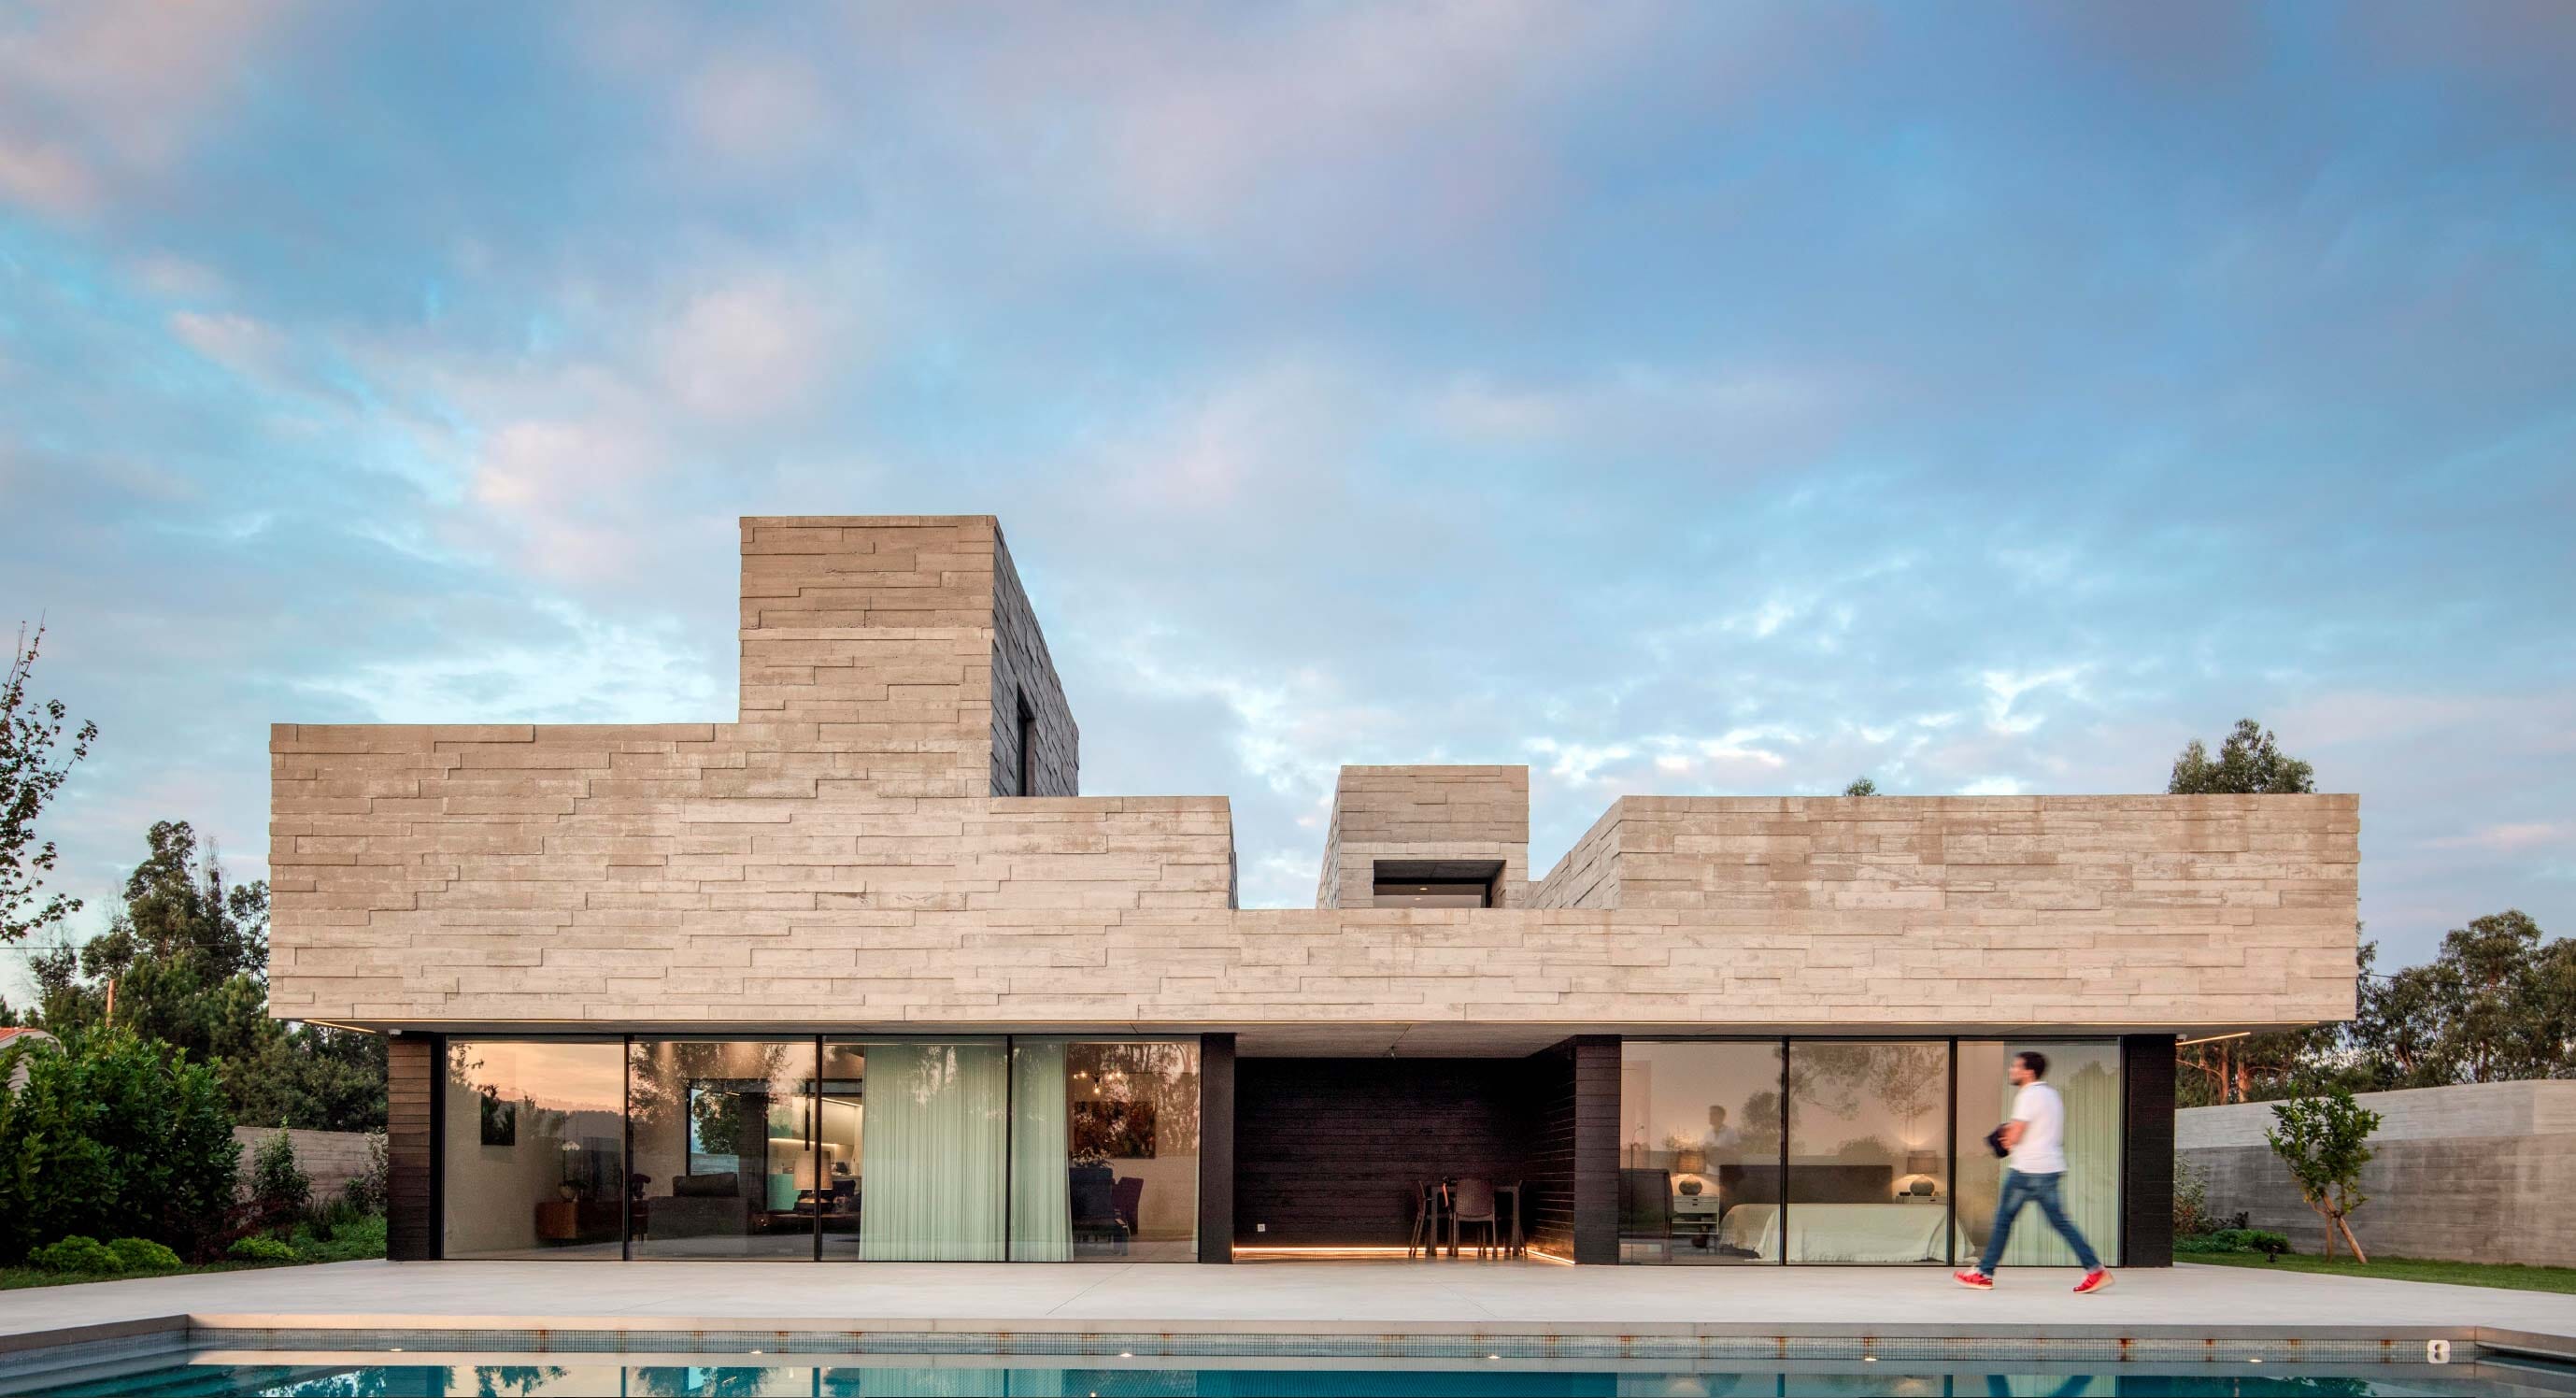 Casa de Agrela: A roof that does more